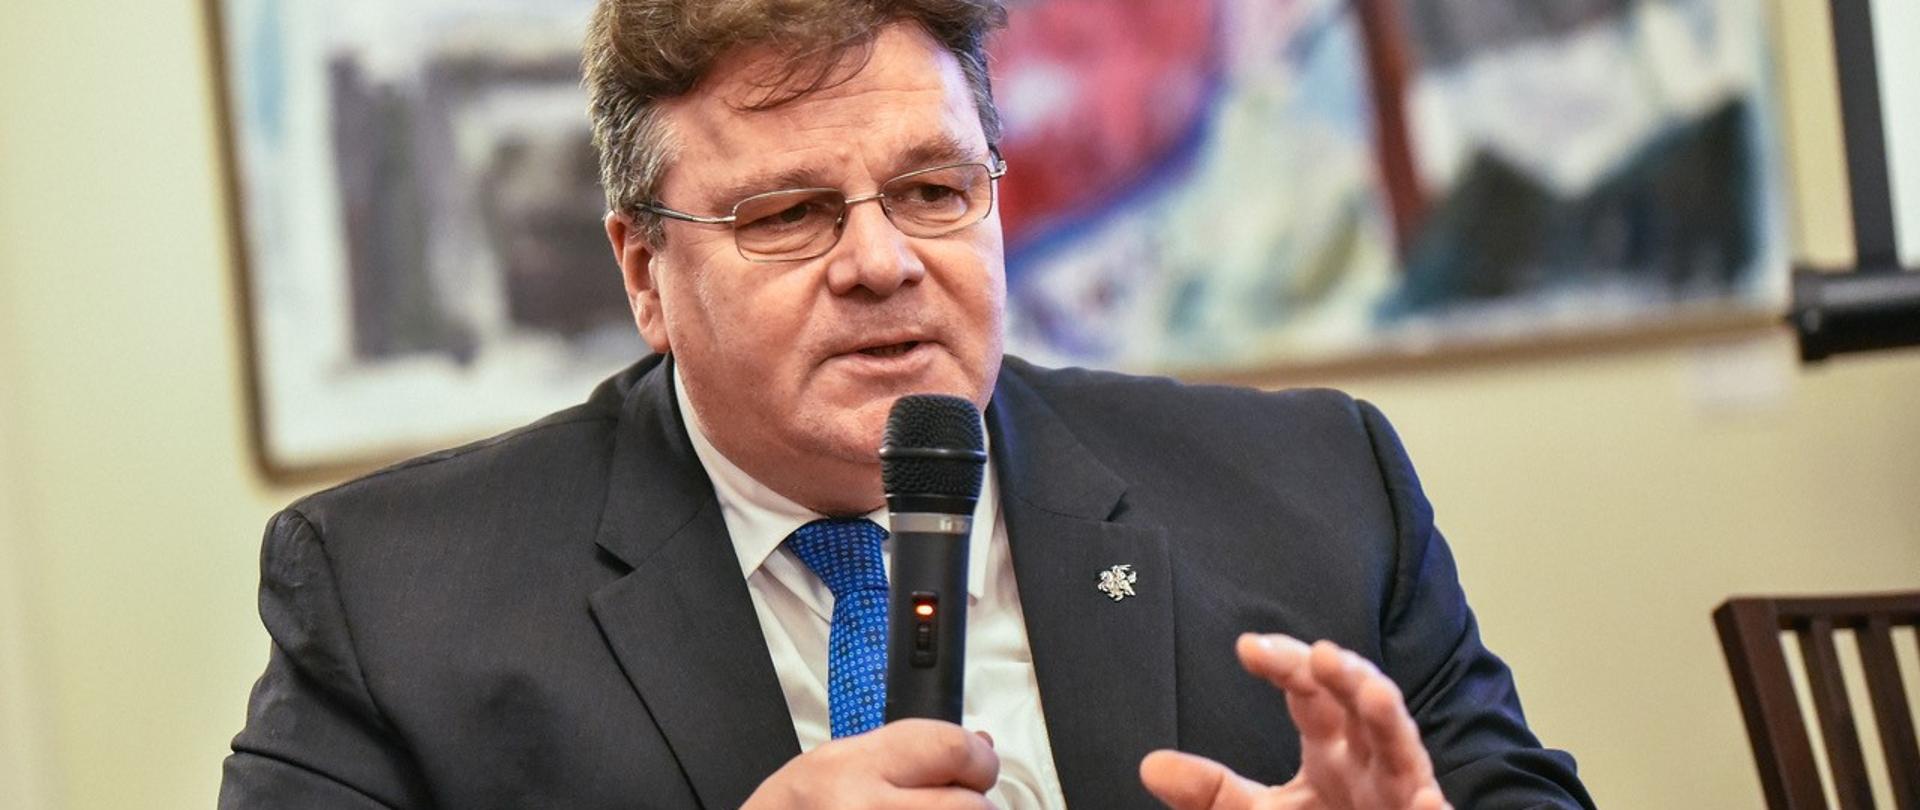 Linas LINKEVIČIUS - Lithuania’s former foreign and defence minister 